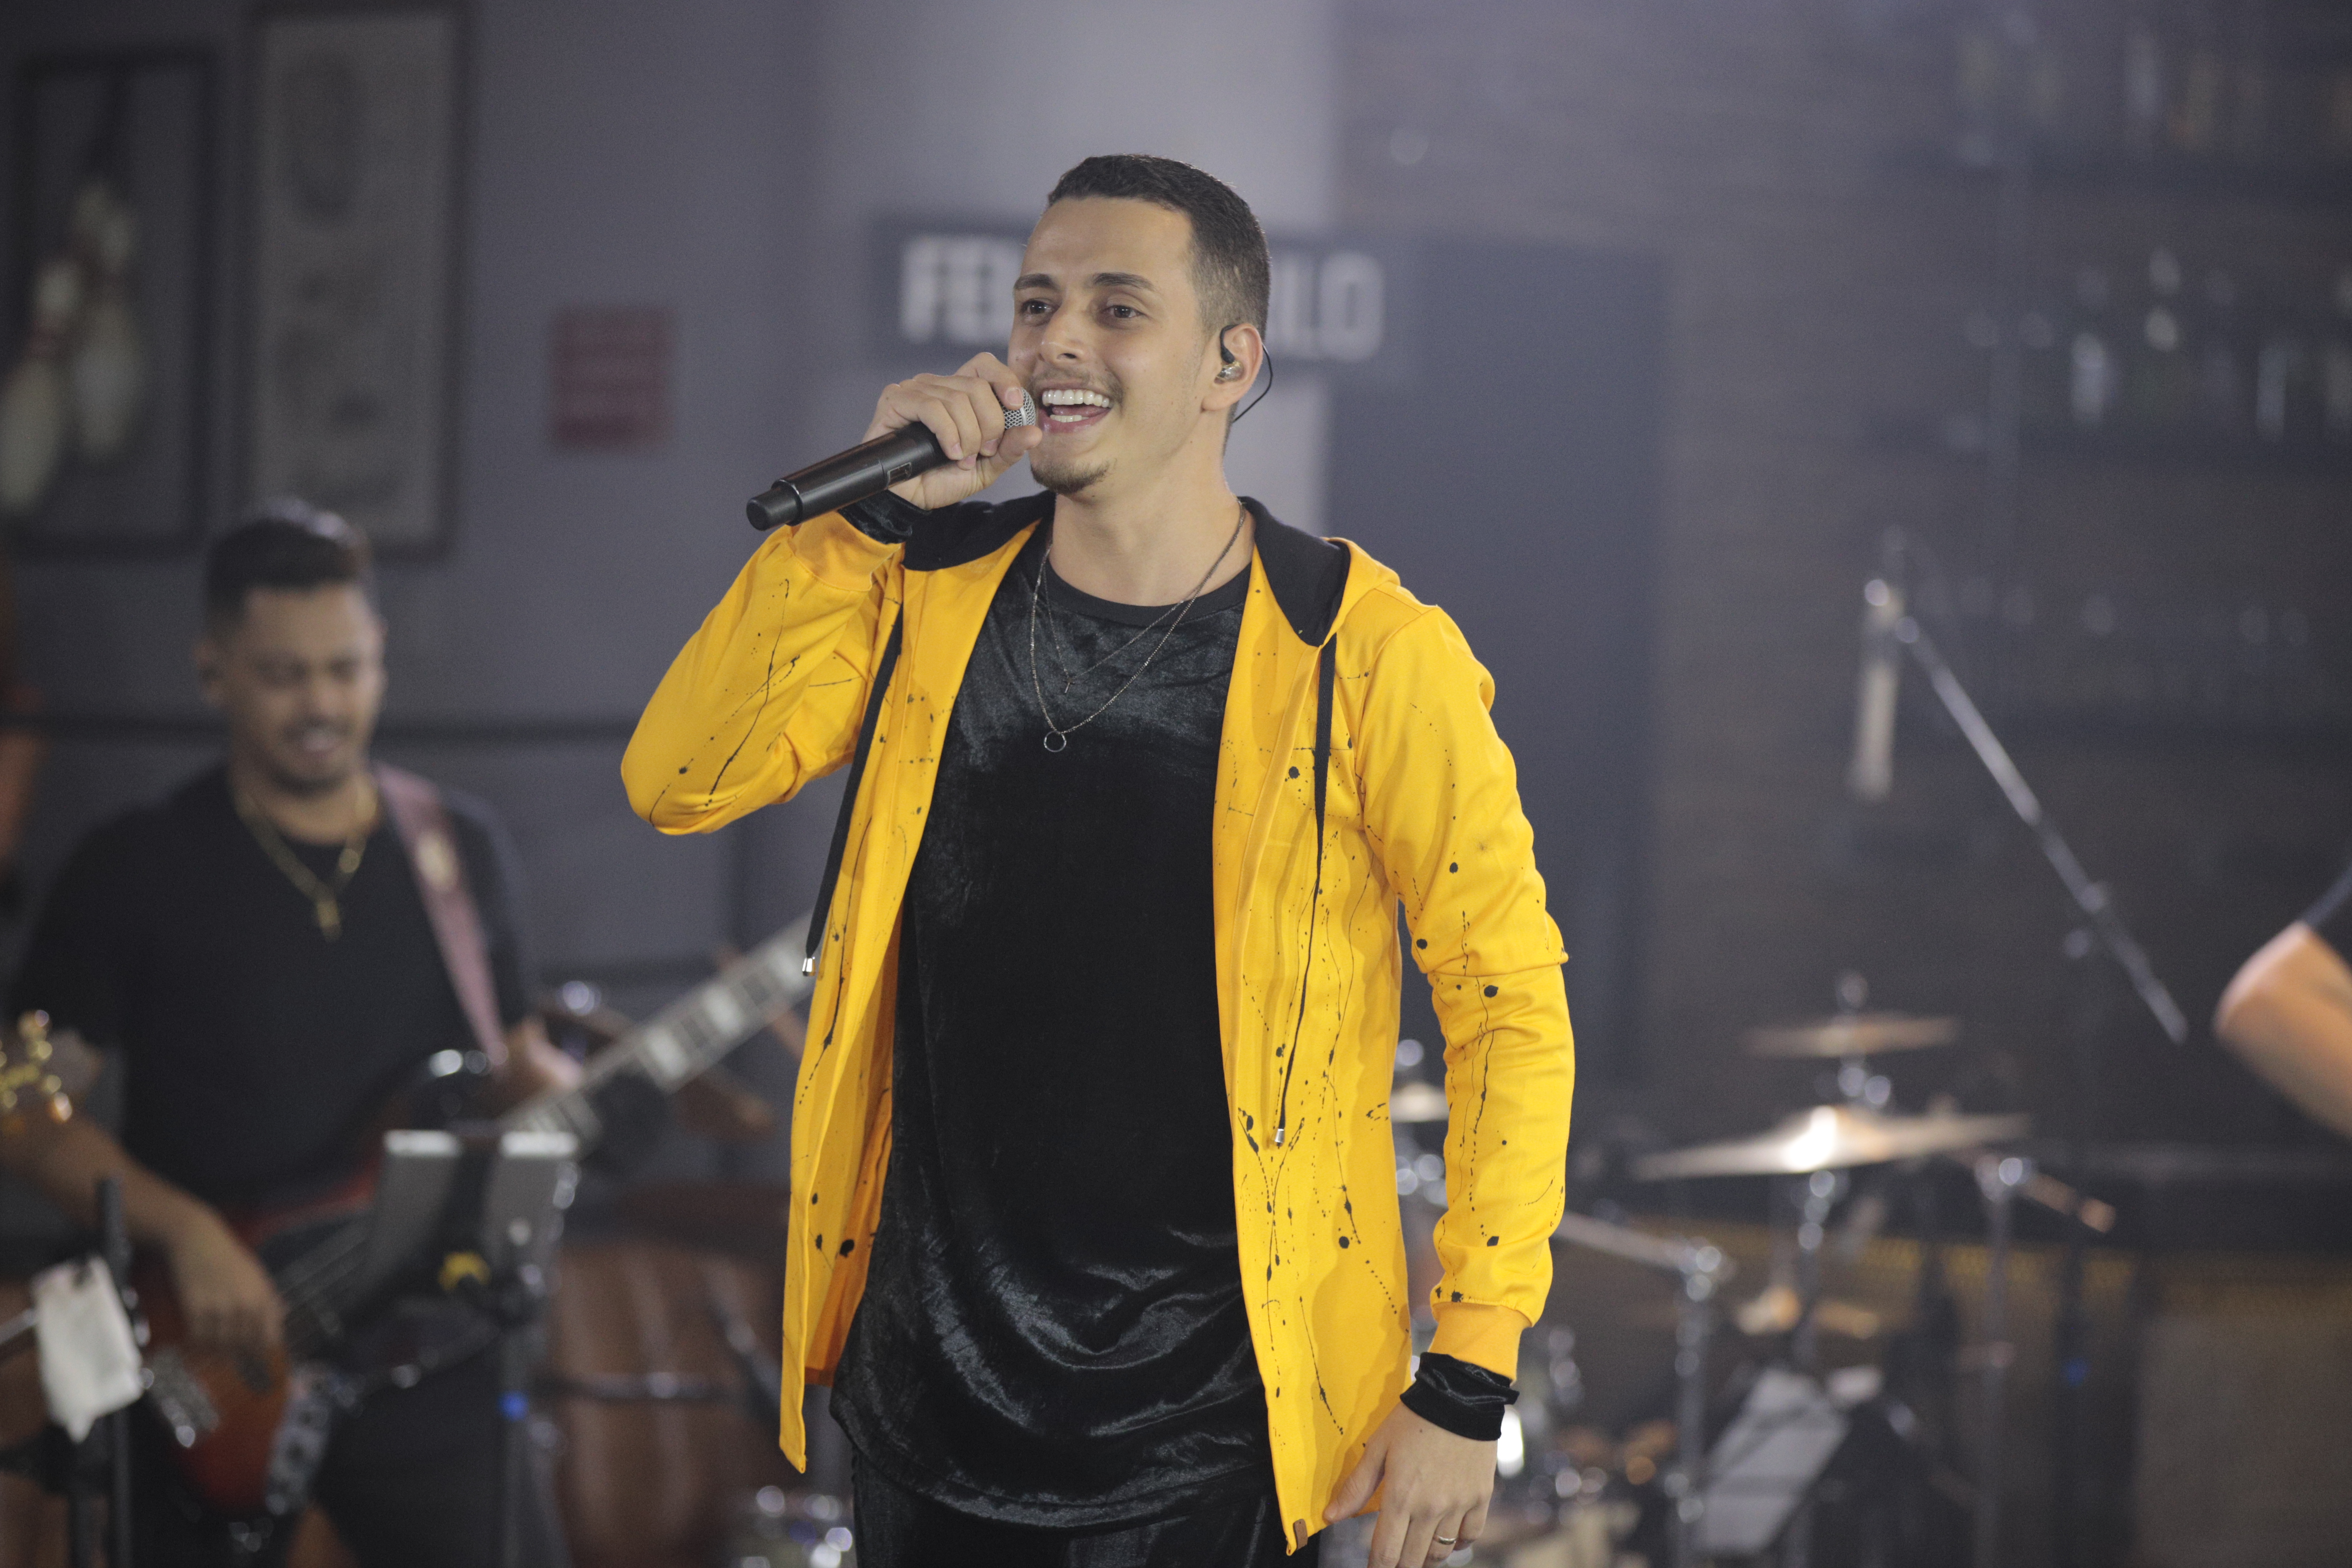 Felipe Grilo lança videoclipe do novo hit “Avon” 41